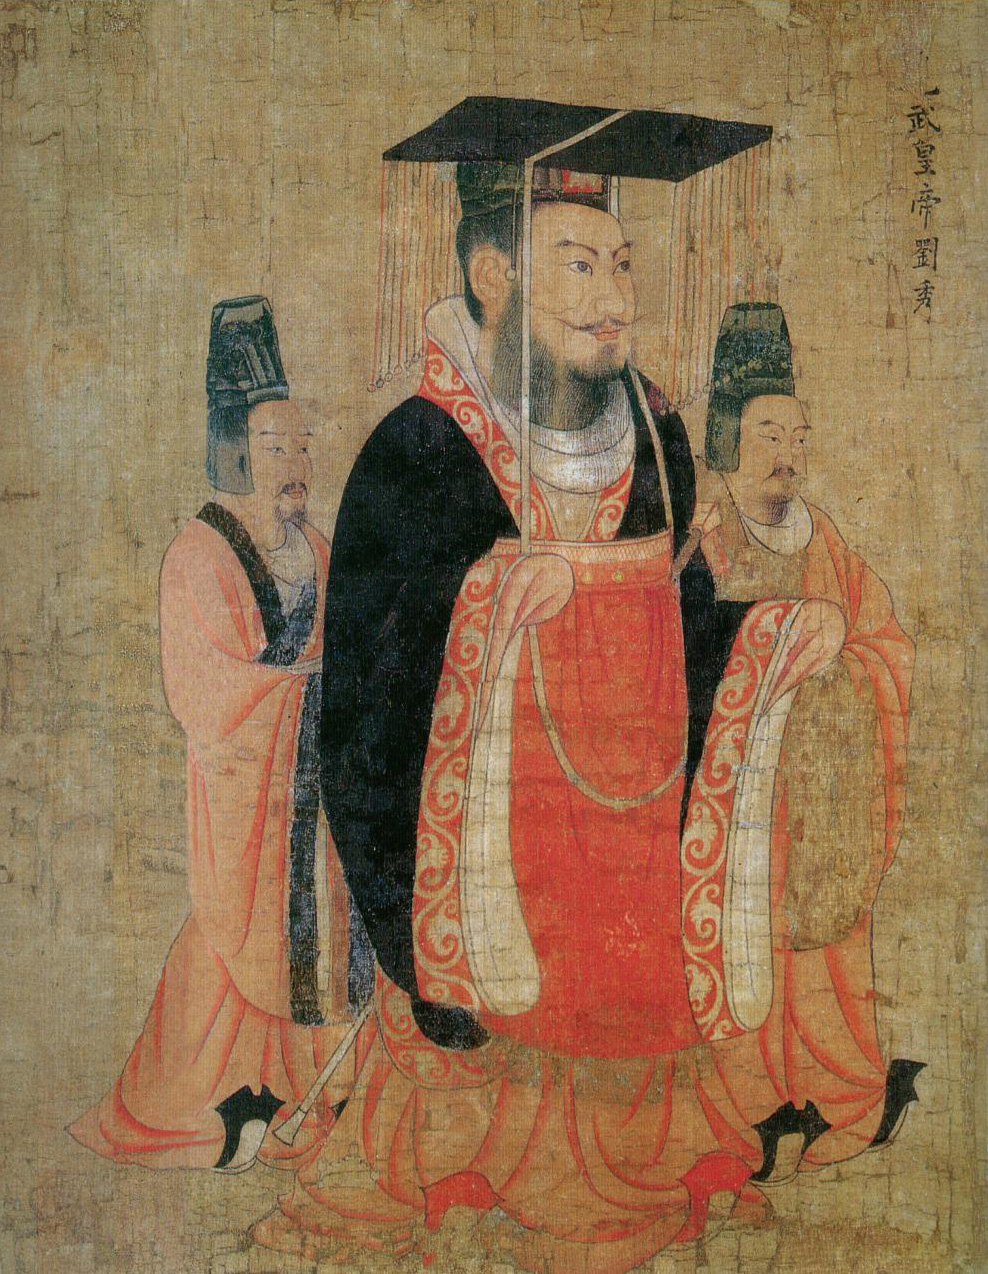 Qin και Han δυναστείες πιο δημοφιλή τέχνη, γλυπτά και πίνακες ζωγραφικής στην αγορά